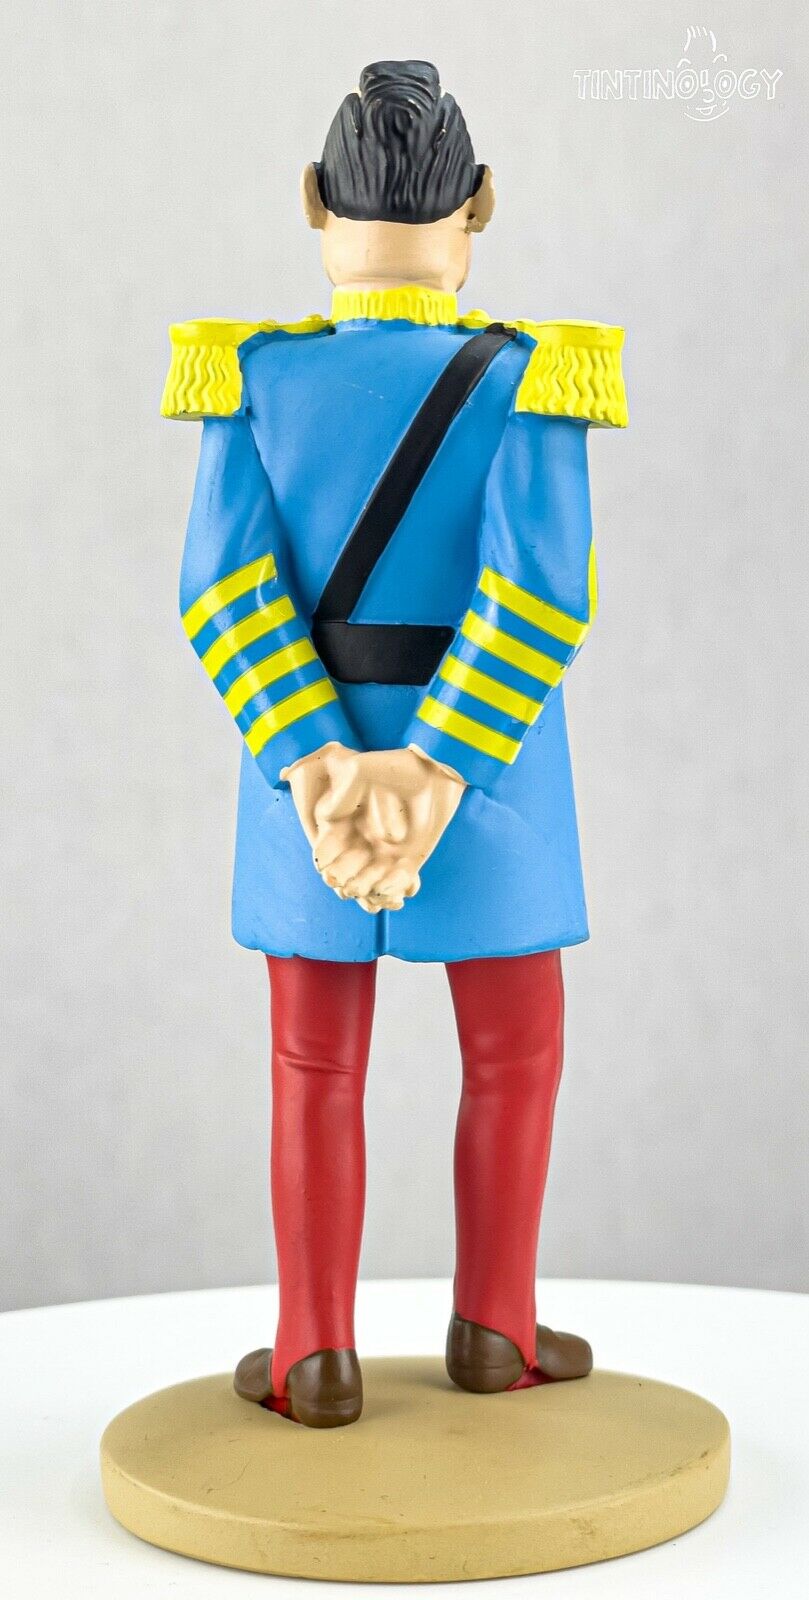 Tintin Figurines Officielle # 42 General Alcazar: Broken Ear Herge model Figure